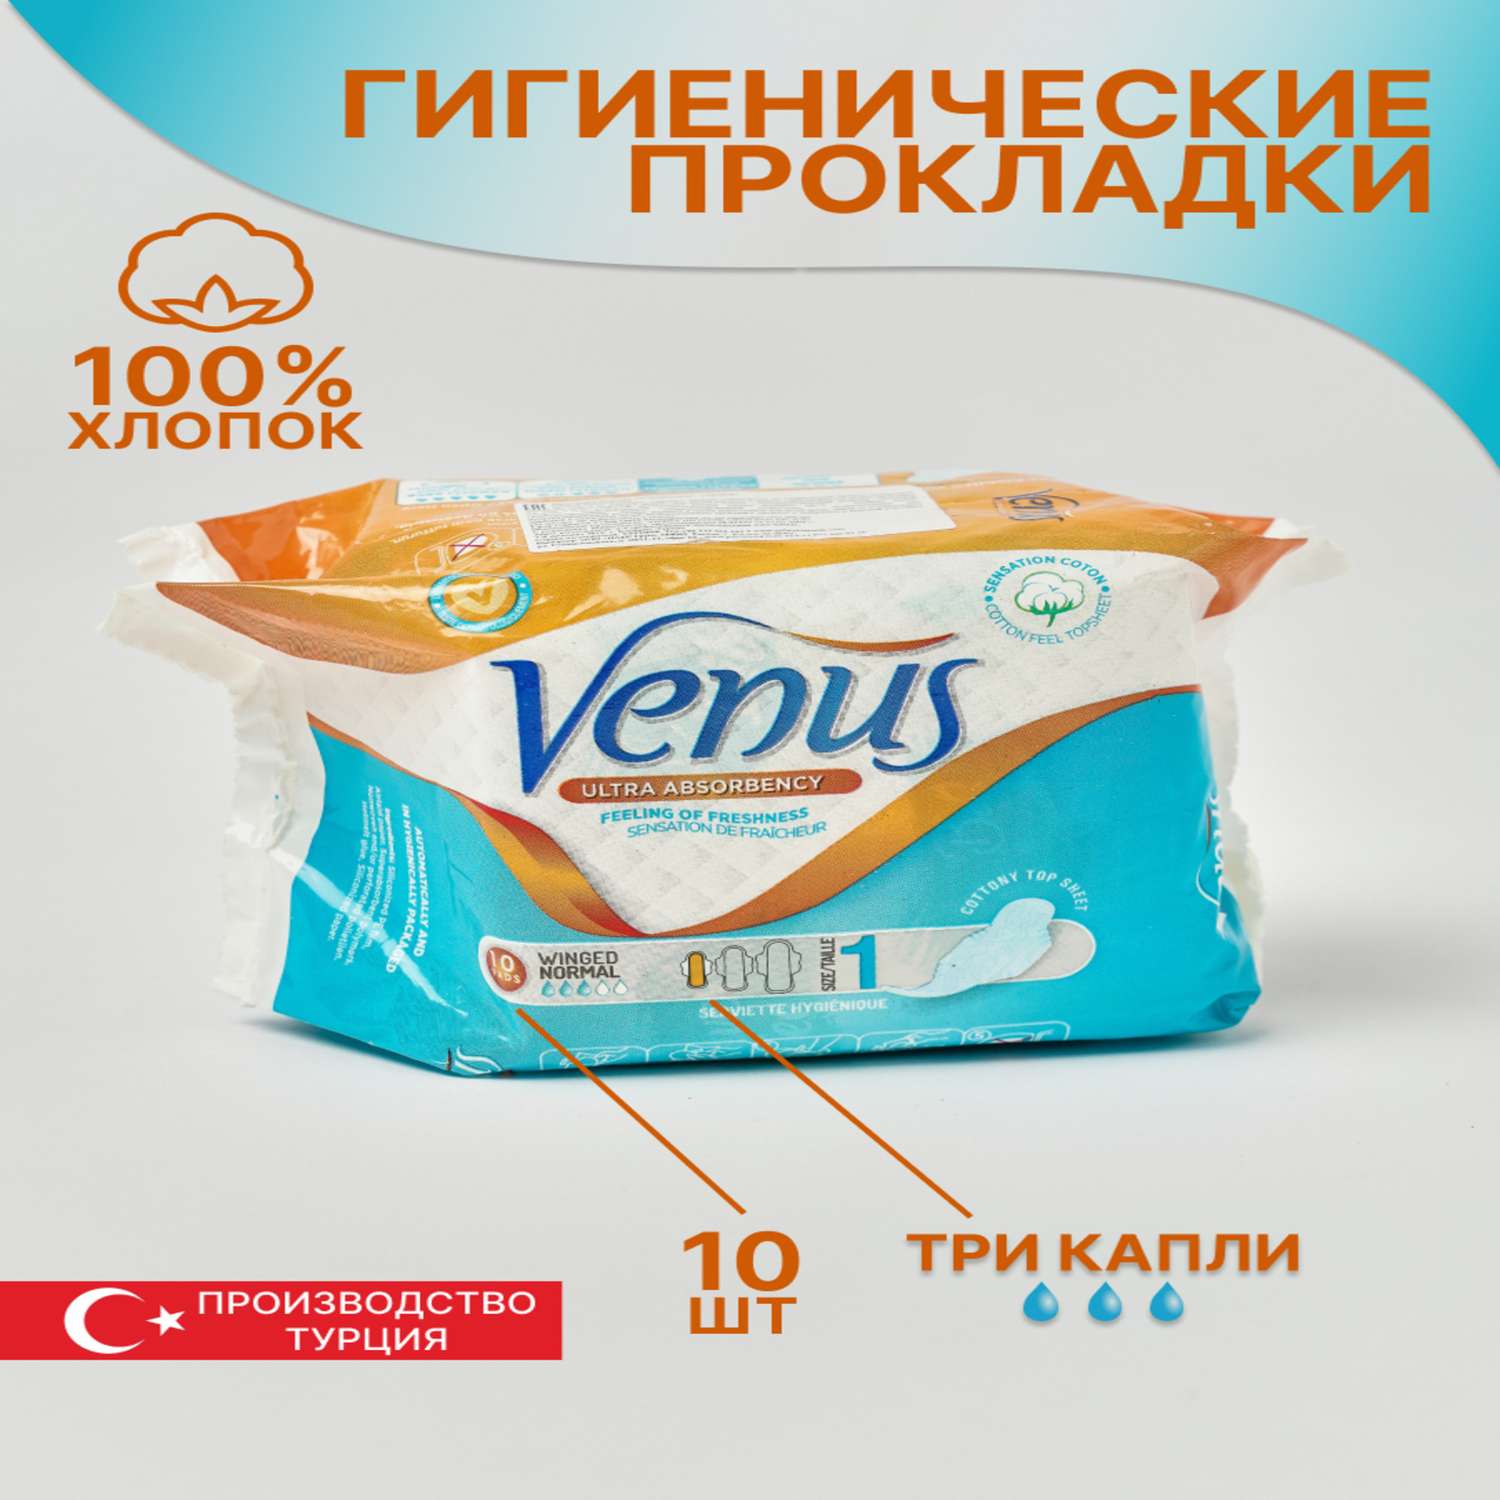 Прокладки Venus Ultra absorbency Normal 10 шт - фото 2